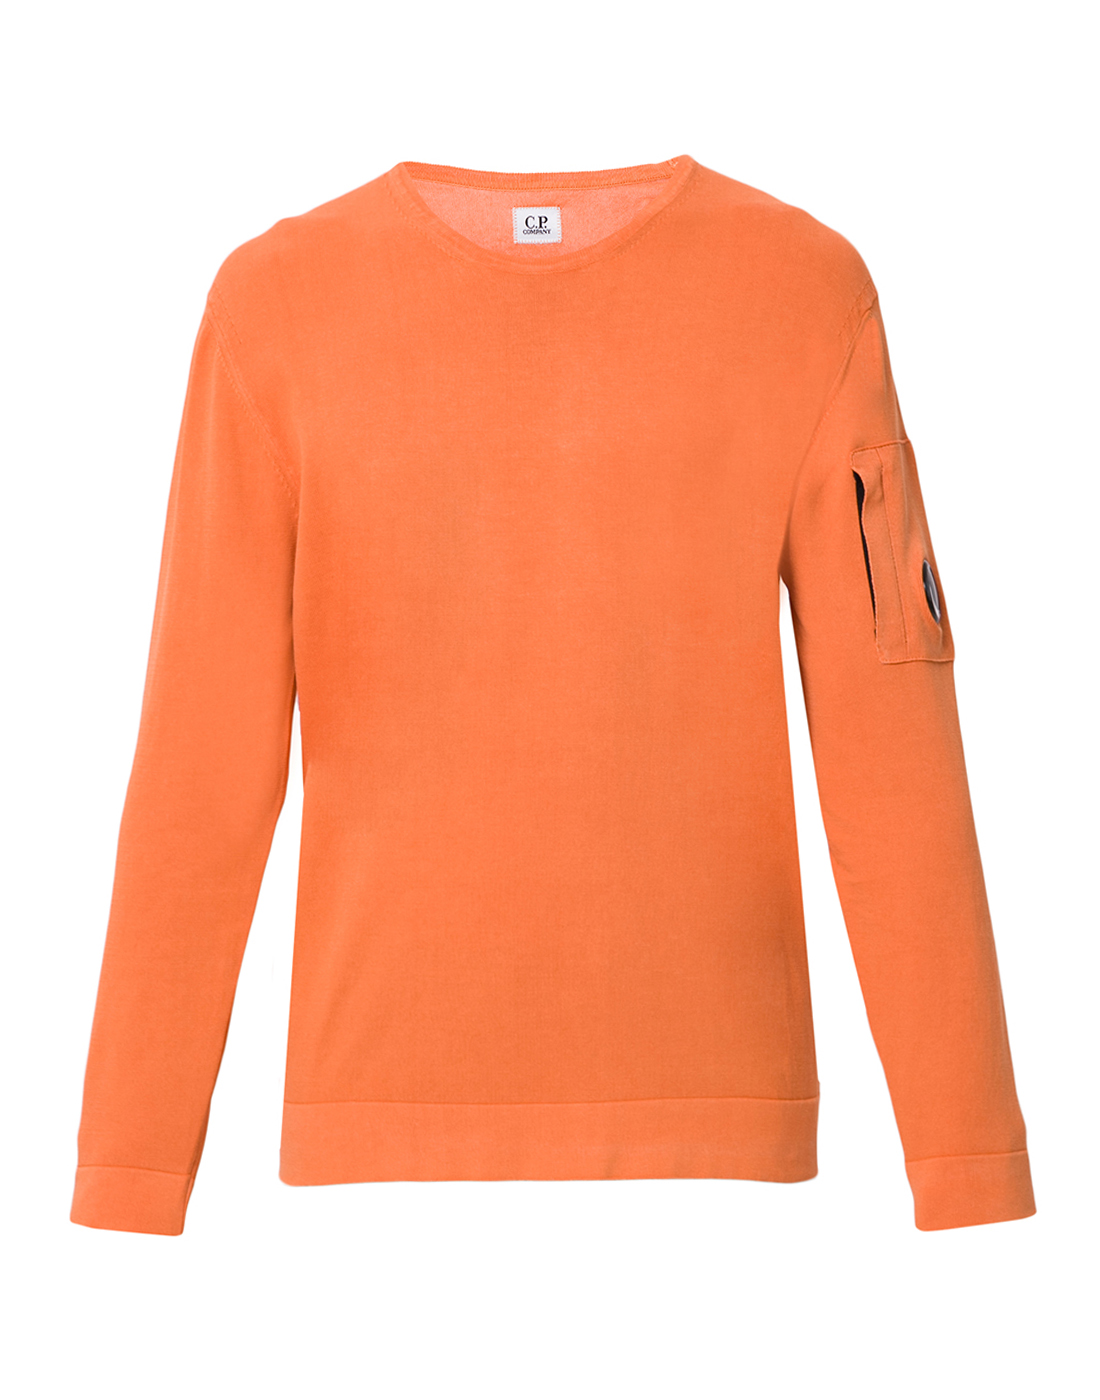 Джемпер оранжевый мужской C.P. Company S14CMKN234A006323S/425-1